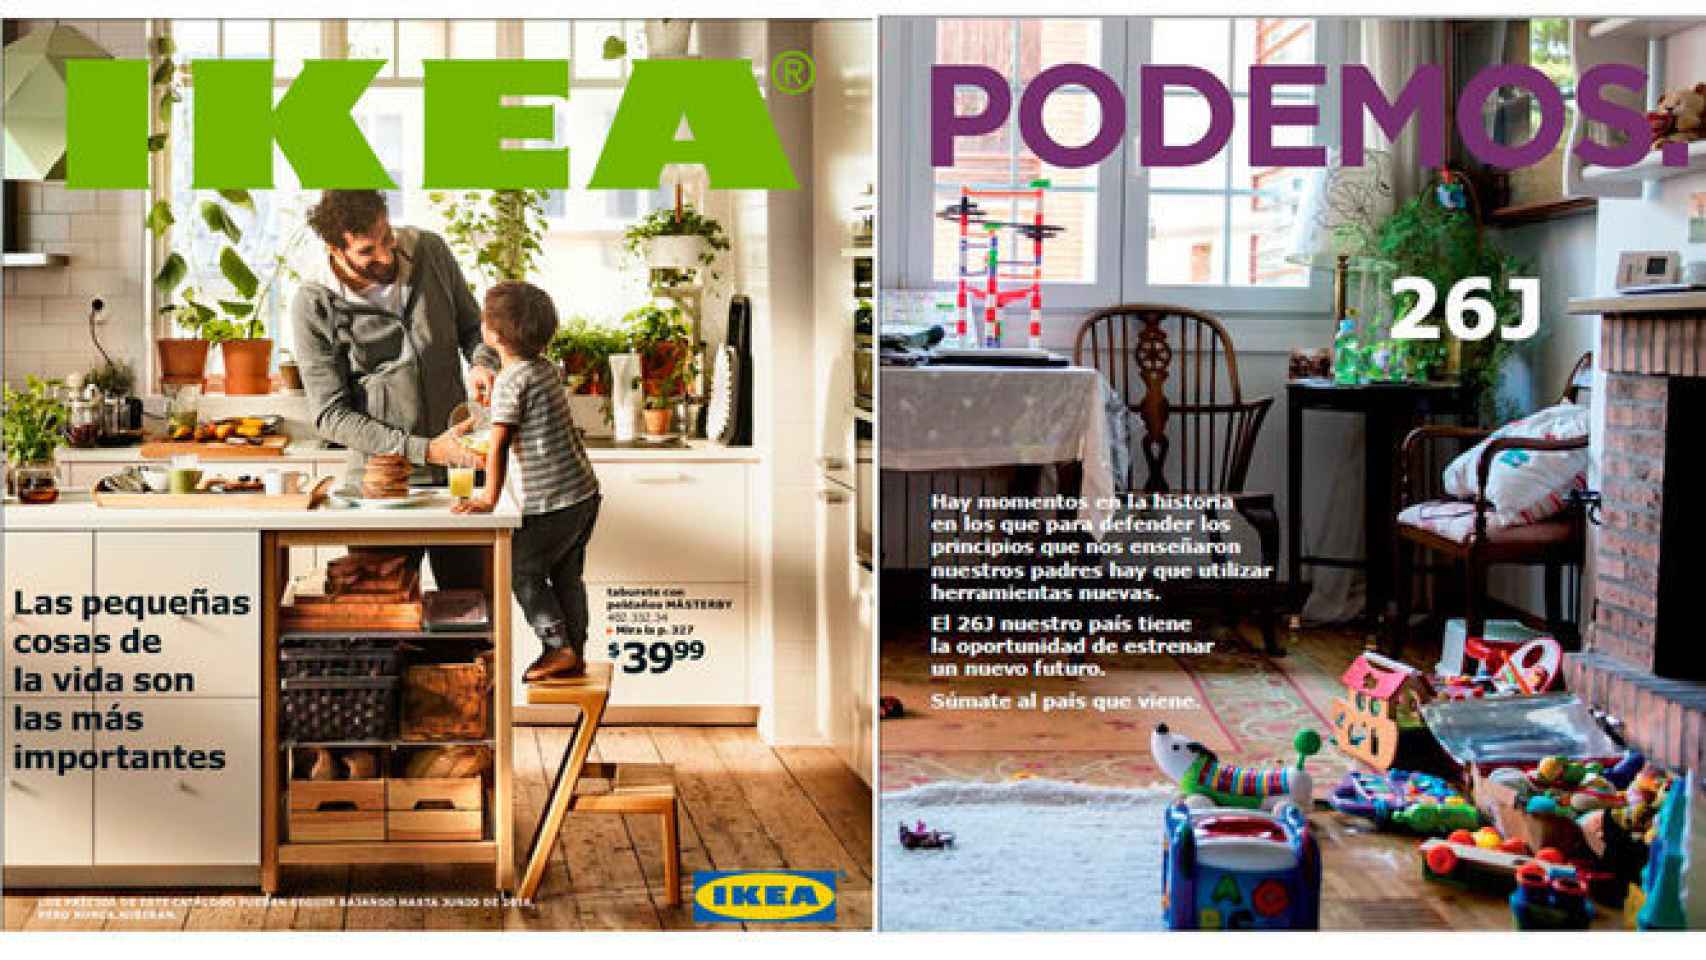 Programa electoral de Podemos a imagen del catálogo de Ikea.